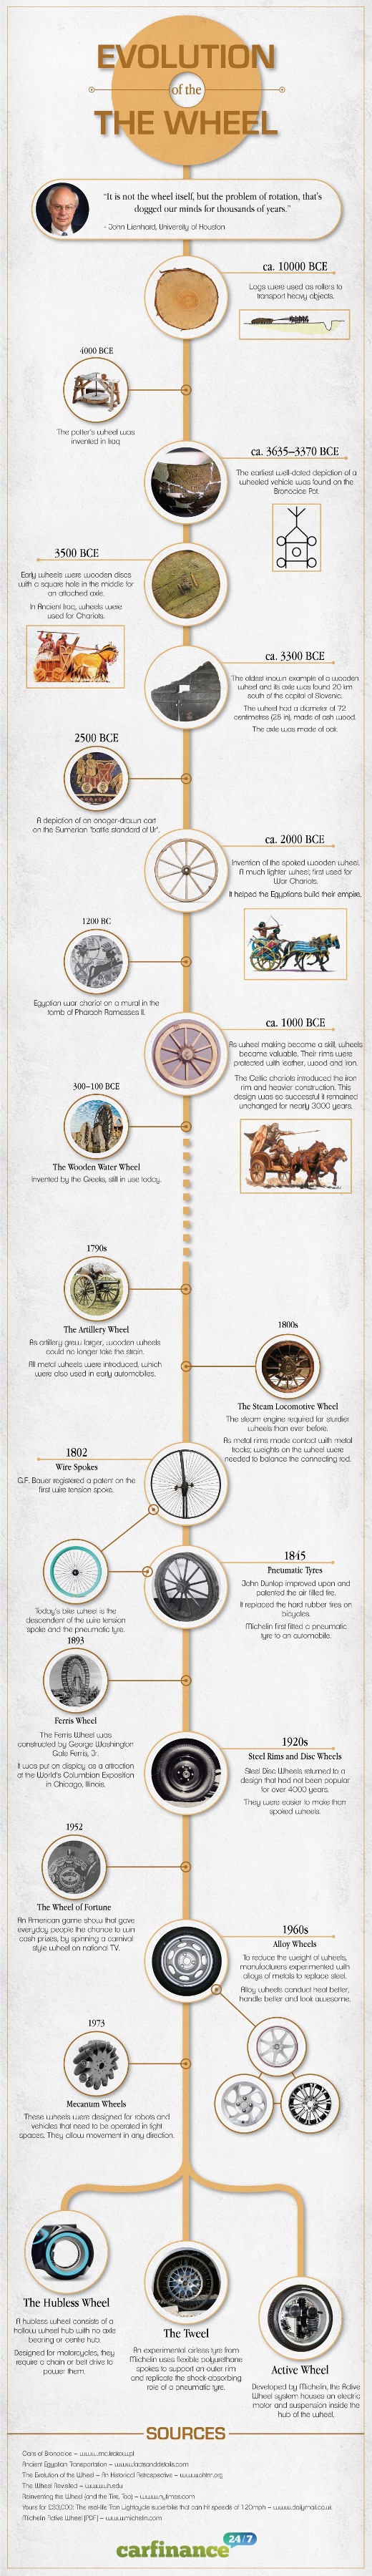 History of the wheel